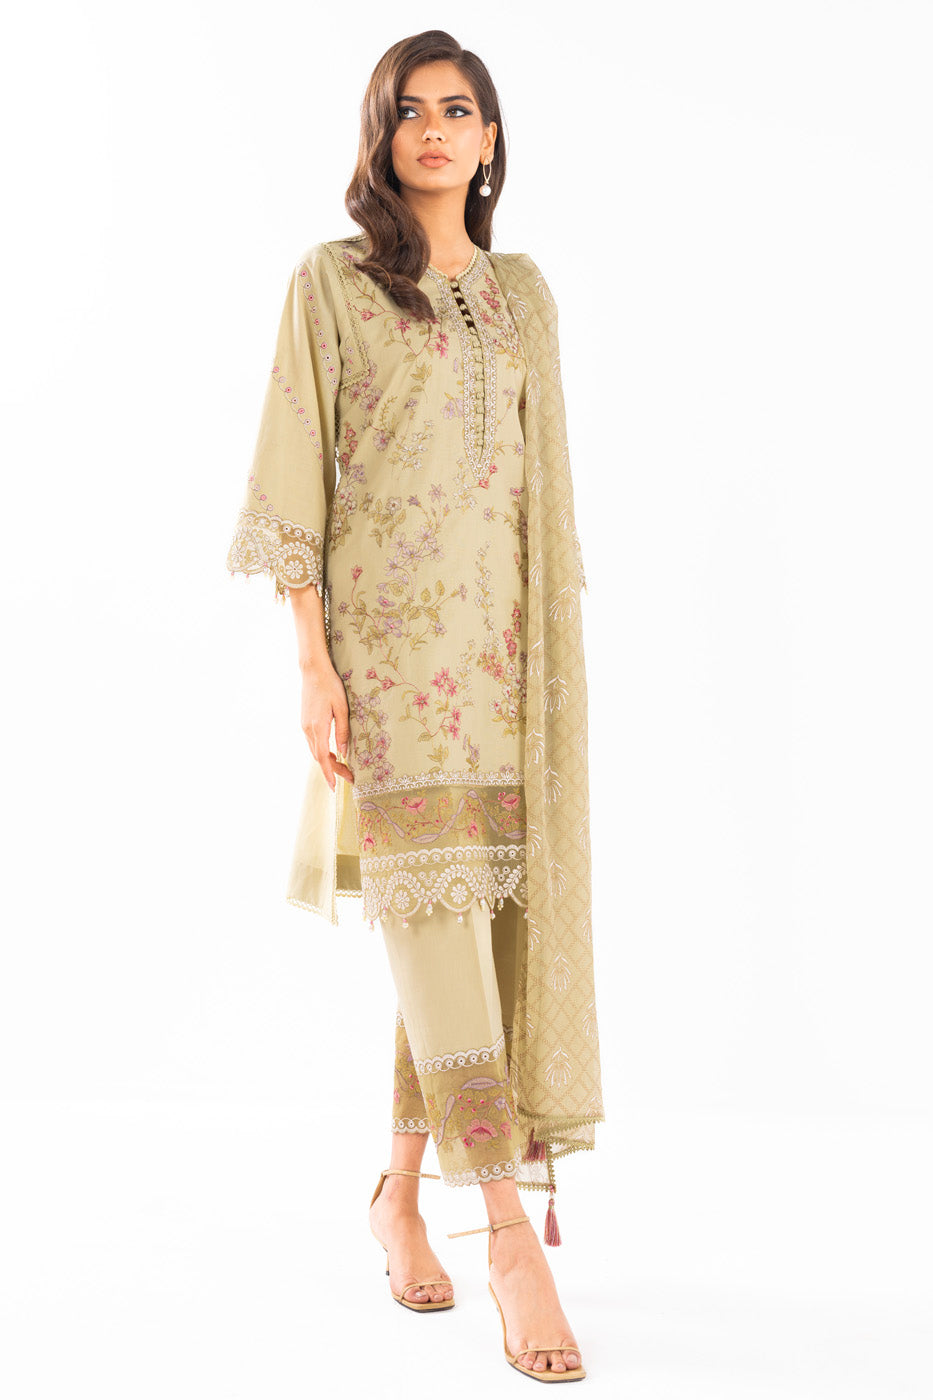 Alkaram | Luxury Lawn 24 | EC-13-24 - Khanumjan  Pakistani Clothes and Designer Dresses in UK, USA 